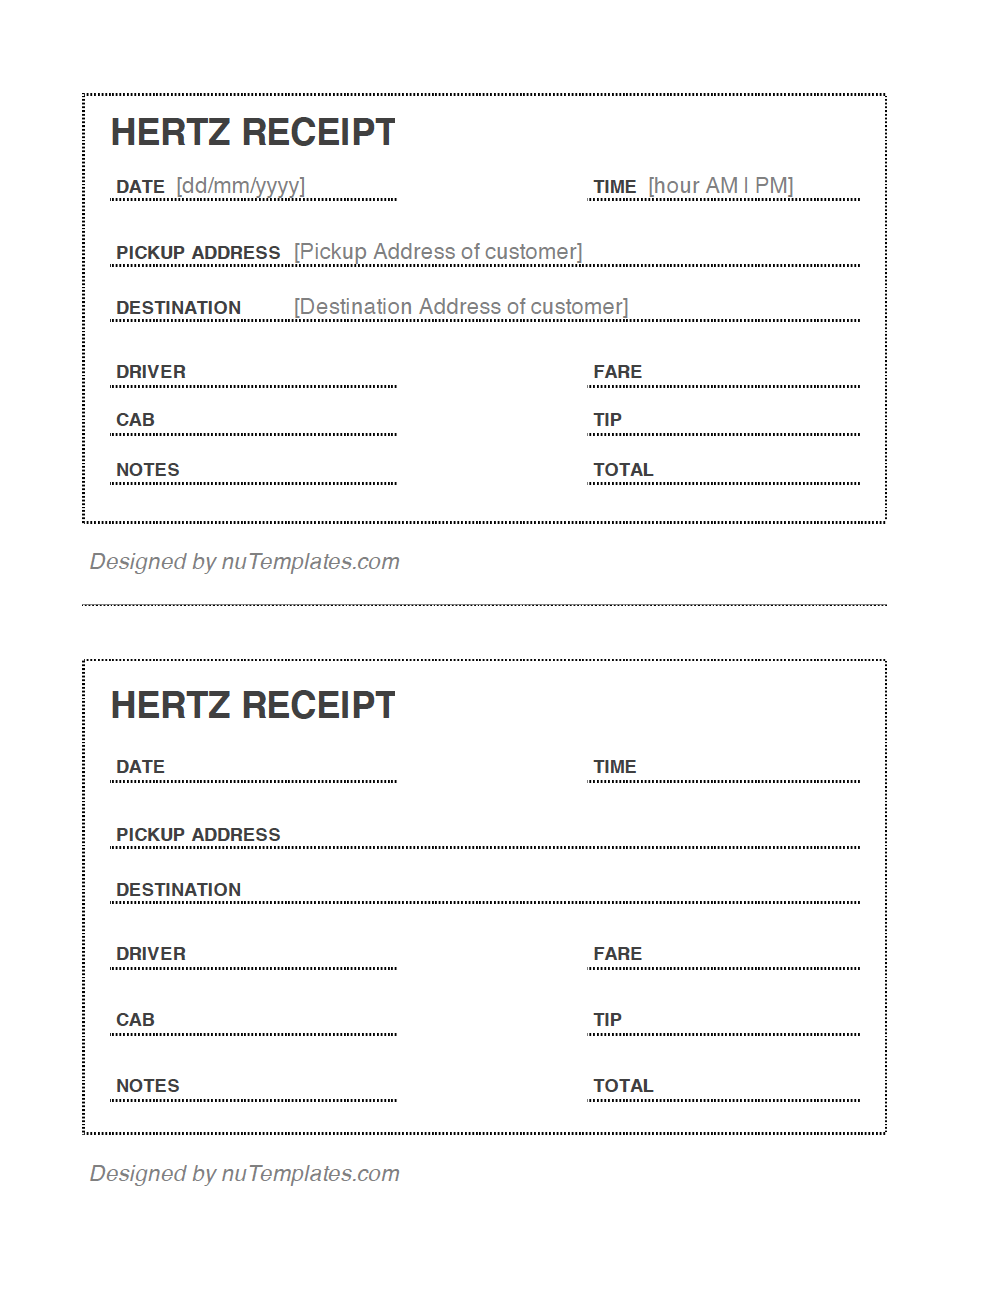 hertz-rental-car-receipt-template-jpg